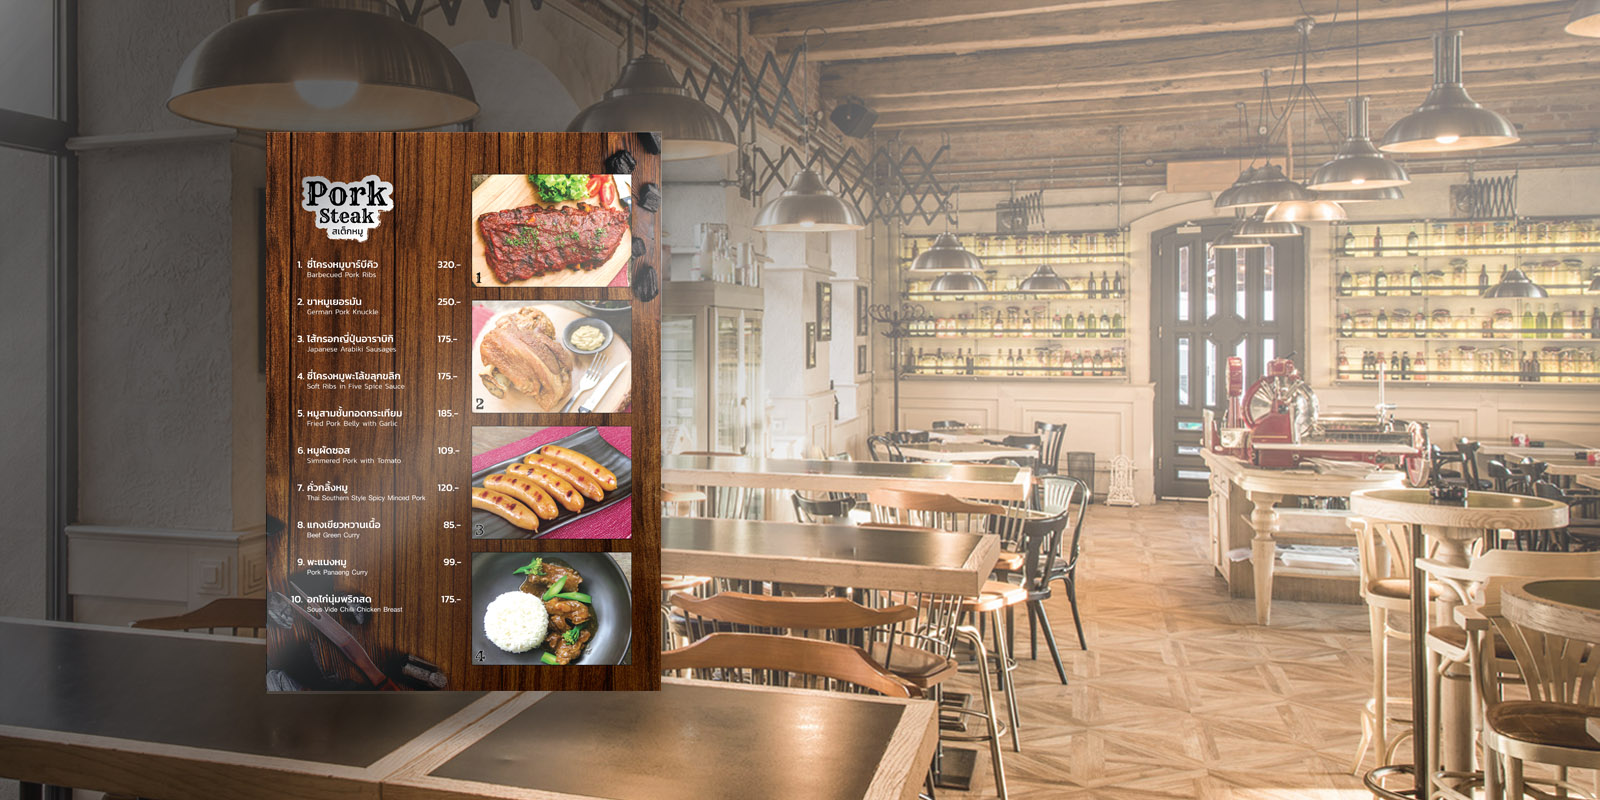 Steakhouse menu design ideas by menu9design